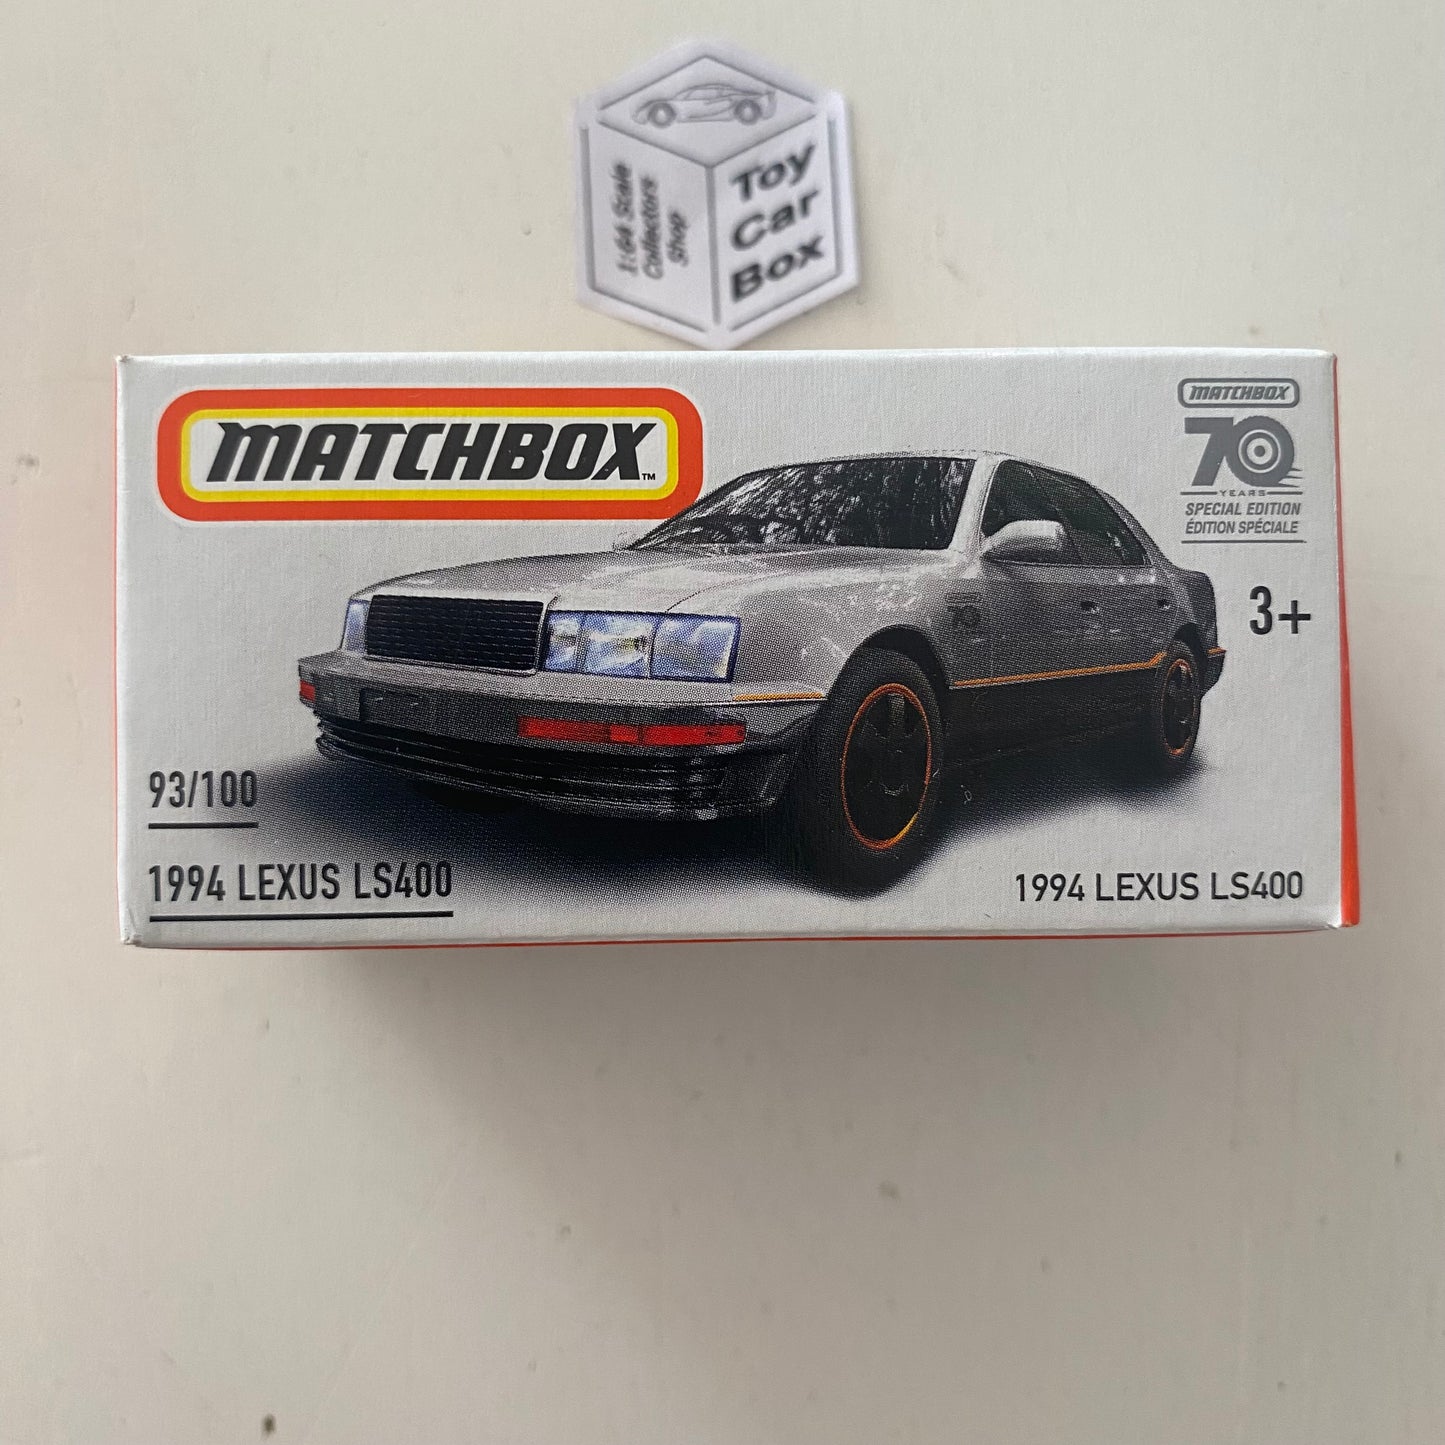 2023 MATCHBOX Power Grab #93 - 1994 Lexus LS400 (Silver -70 Special Edition) B45